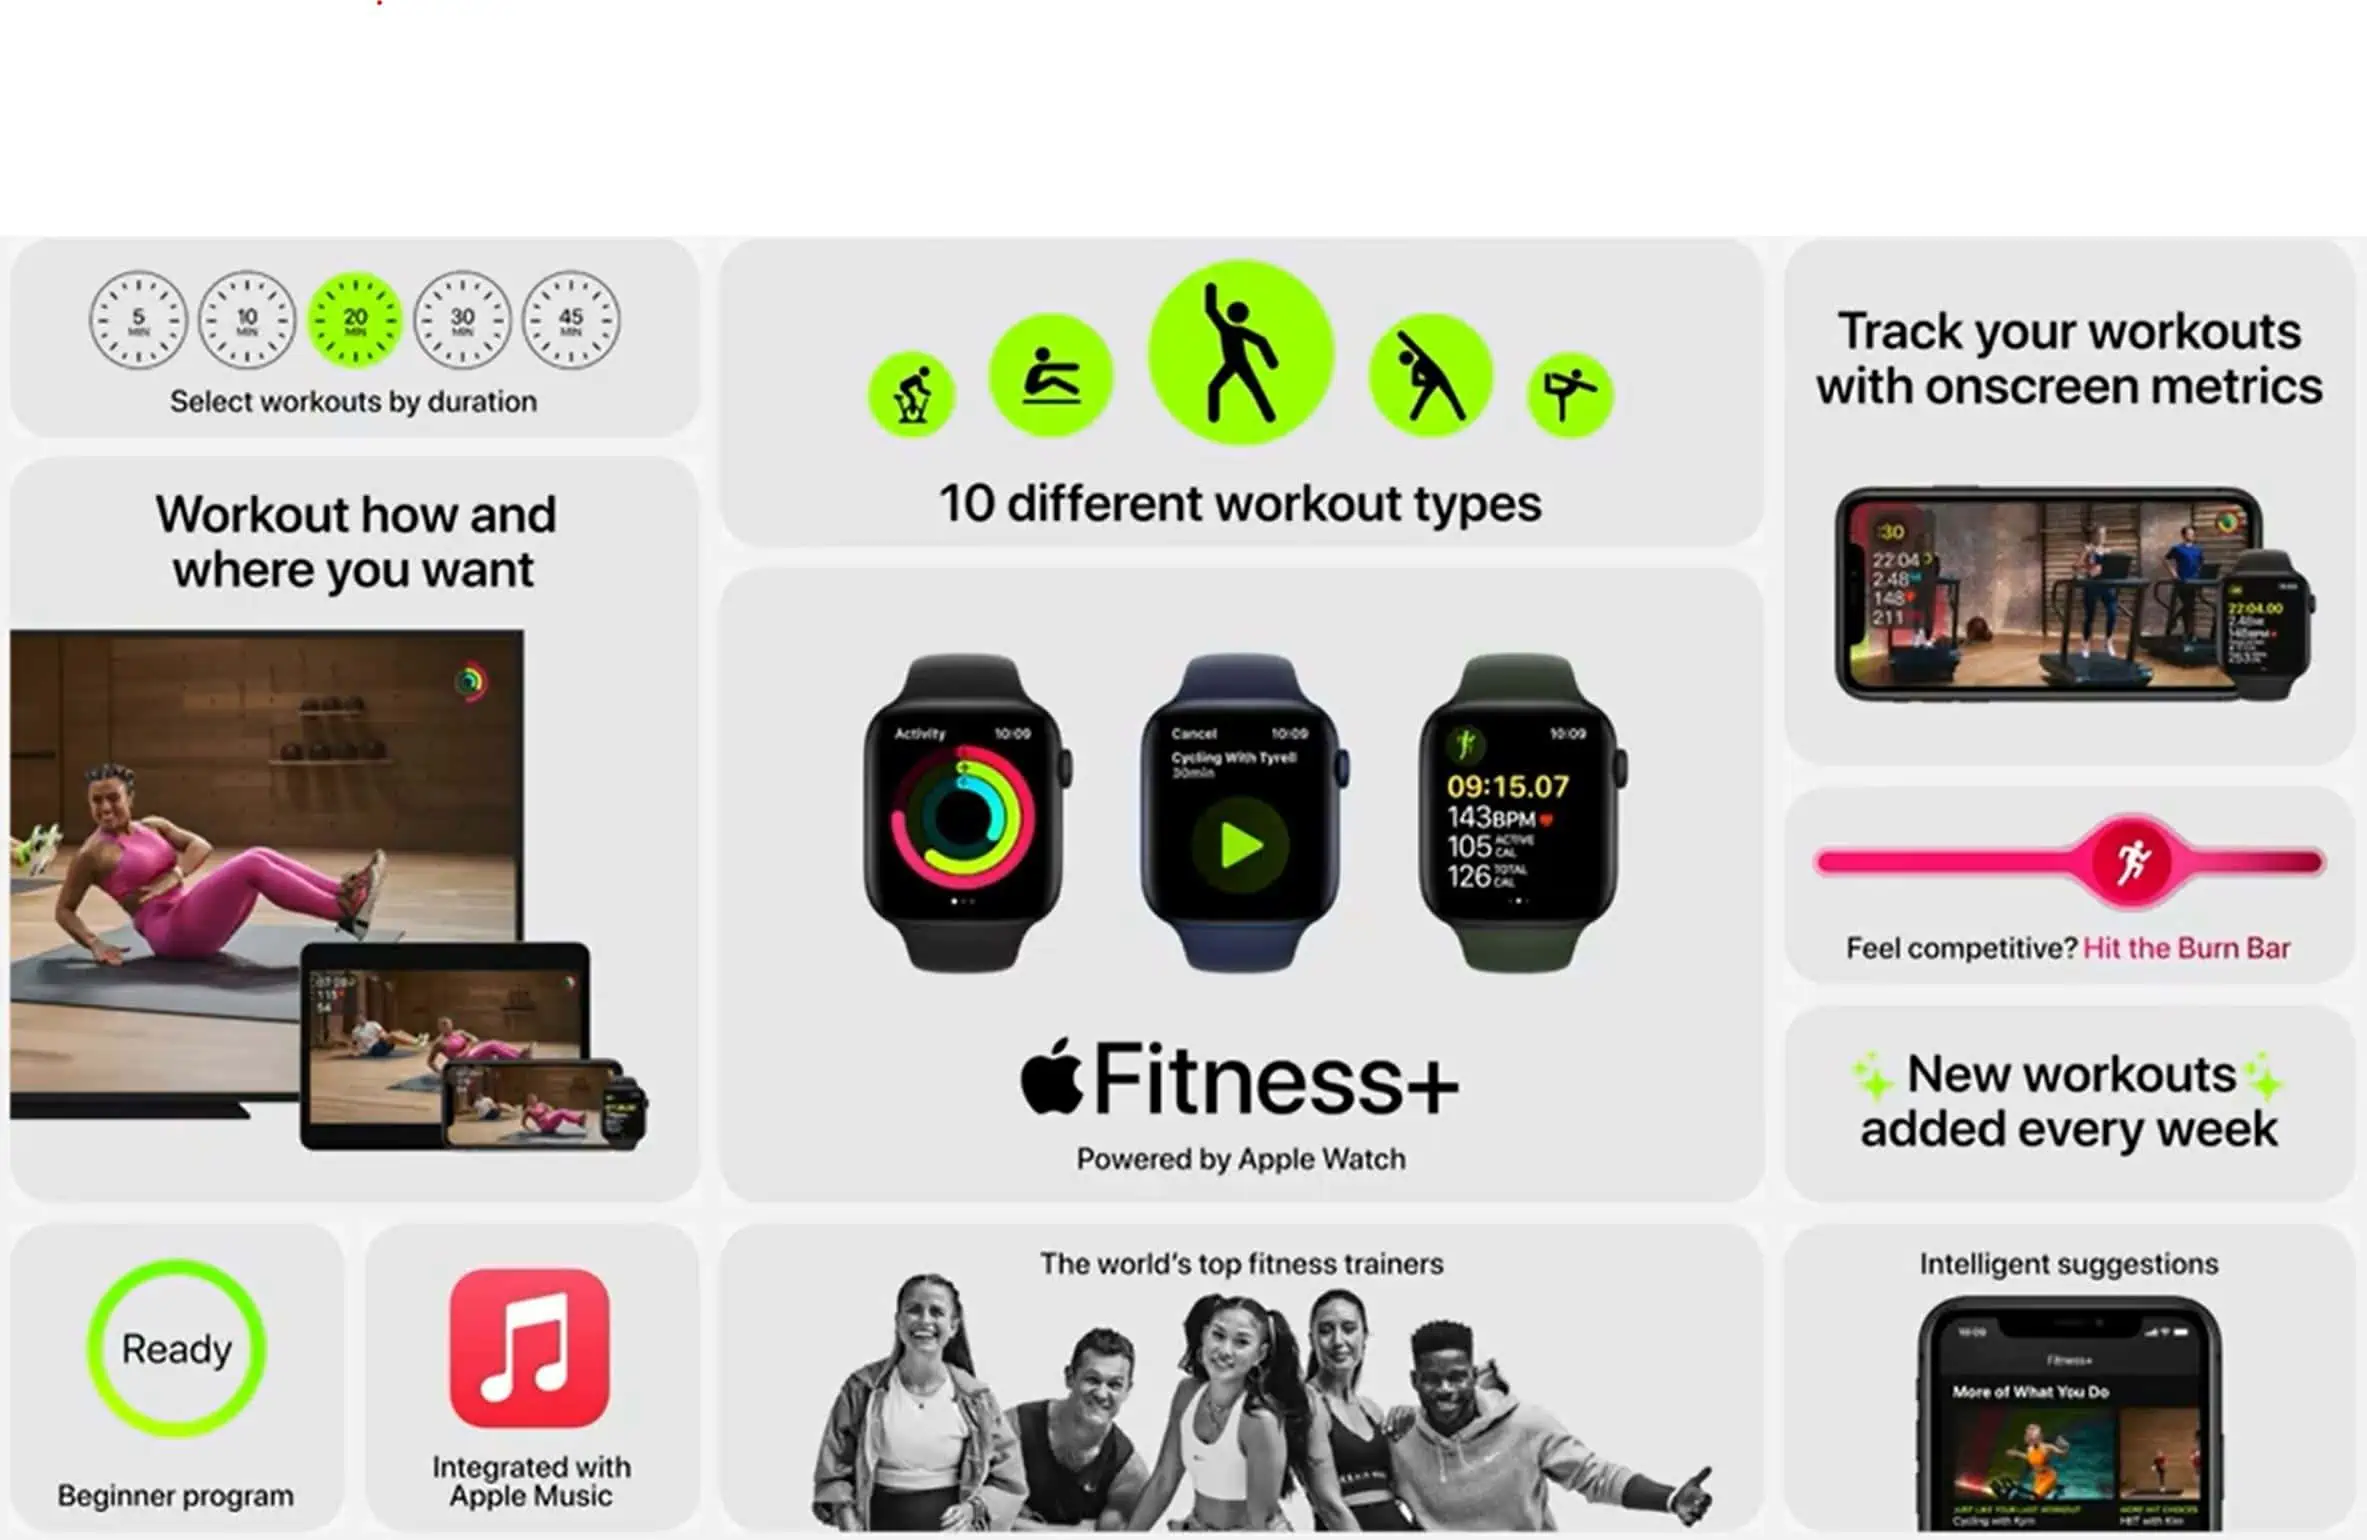 Apple Fitness